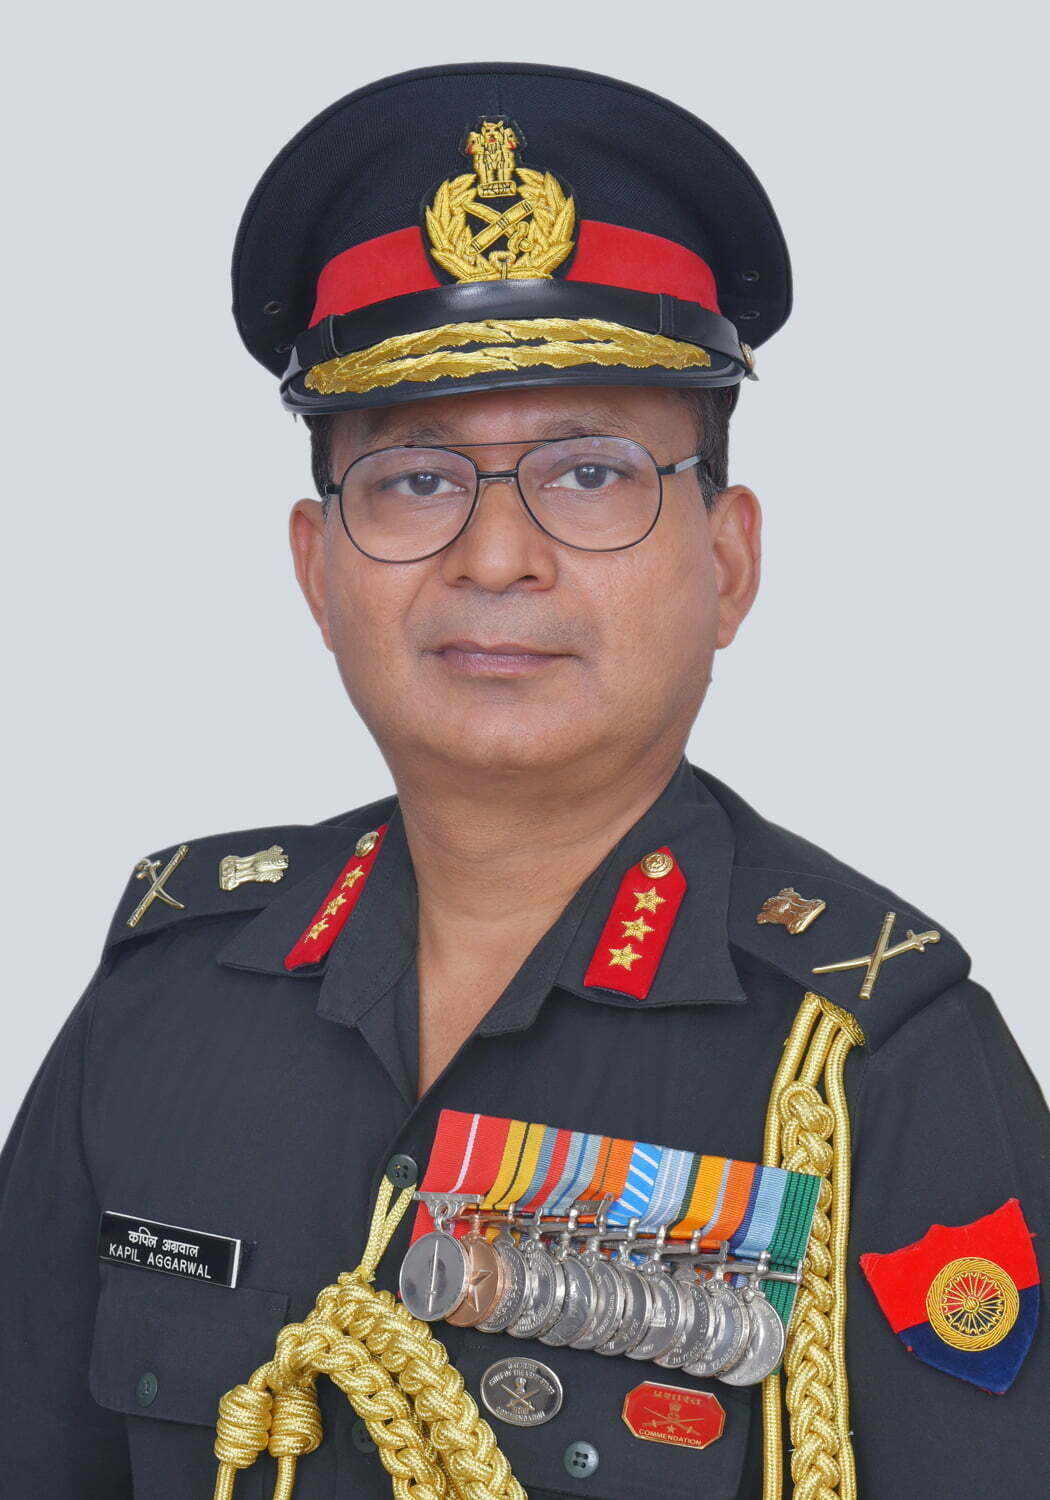 Lt. Gen. K K Aggarwal, AVSM, SM, VSM